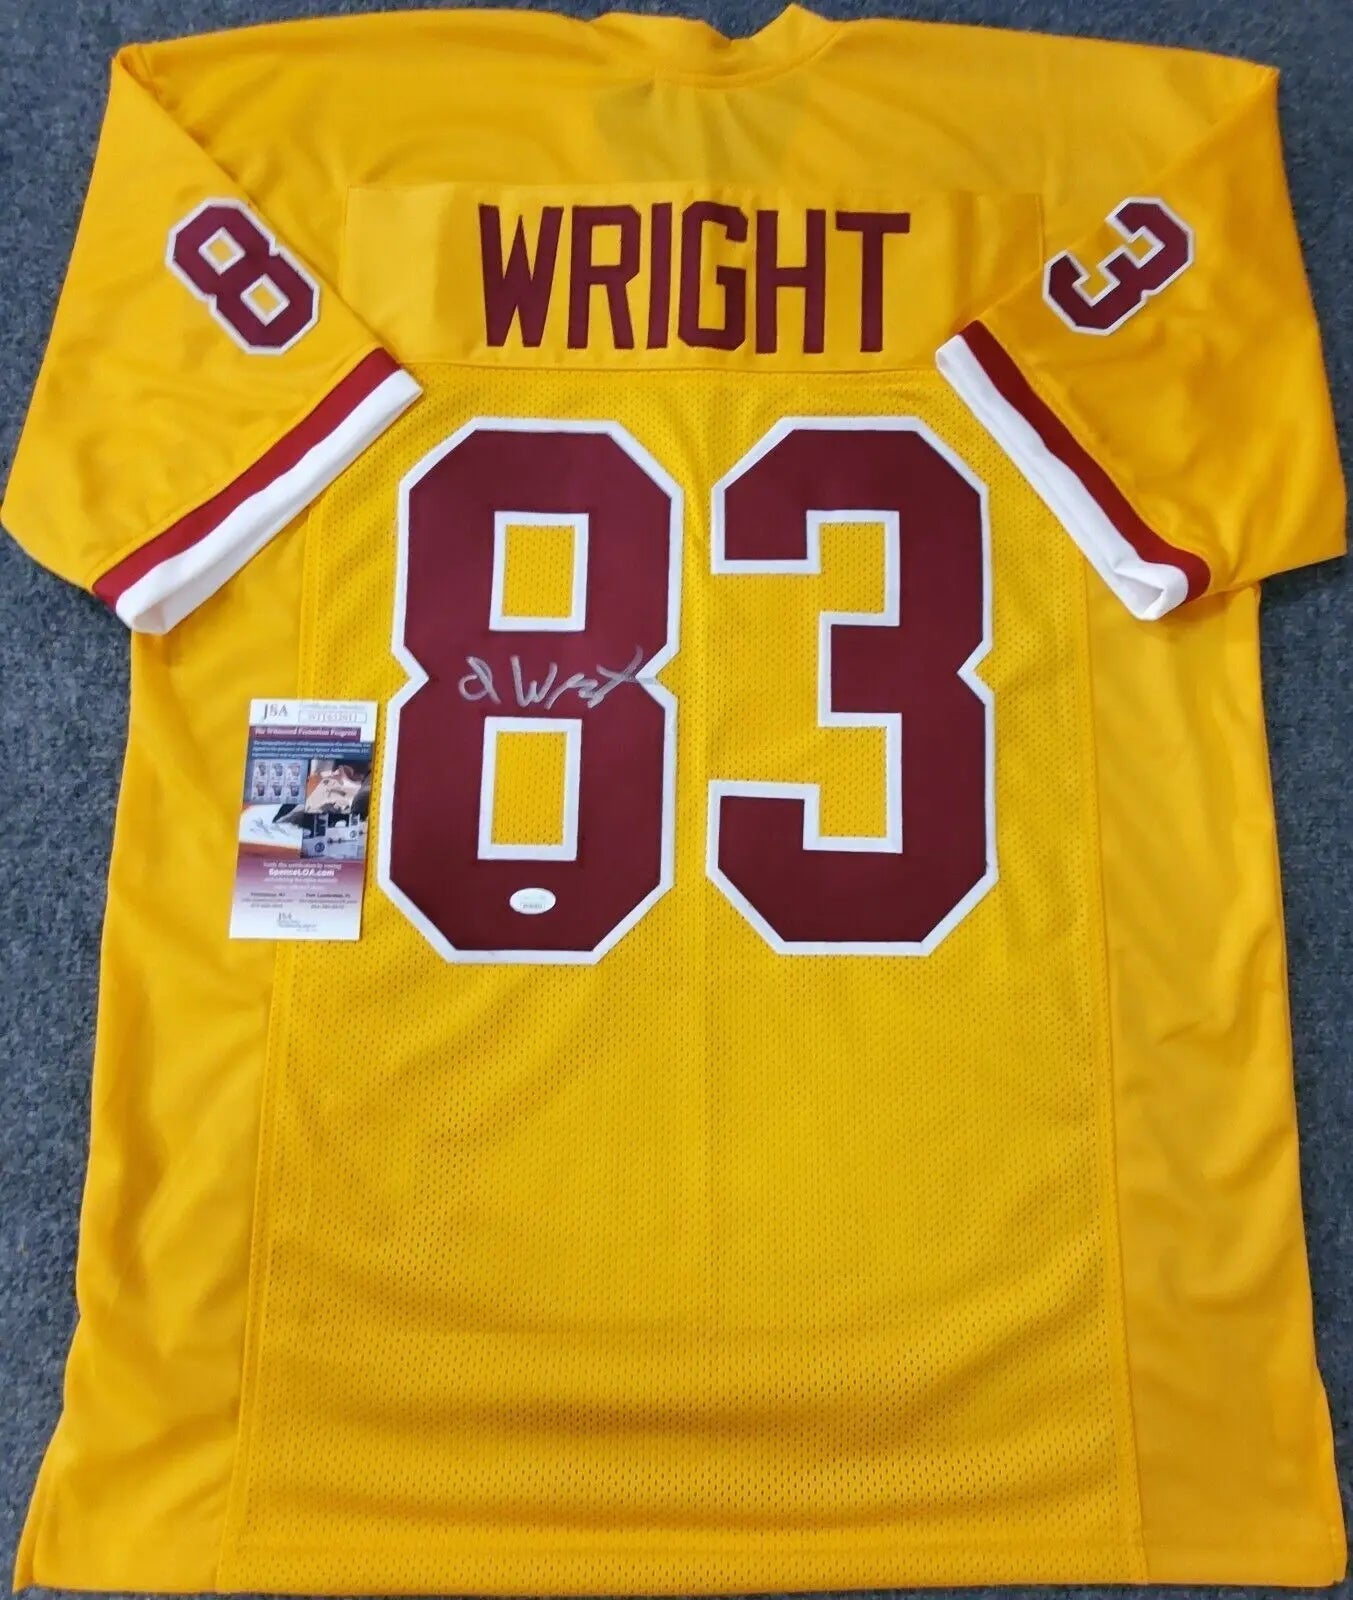 Washington Football Team Isaiah Wright Autographed Signed Jersey